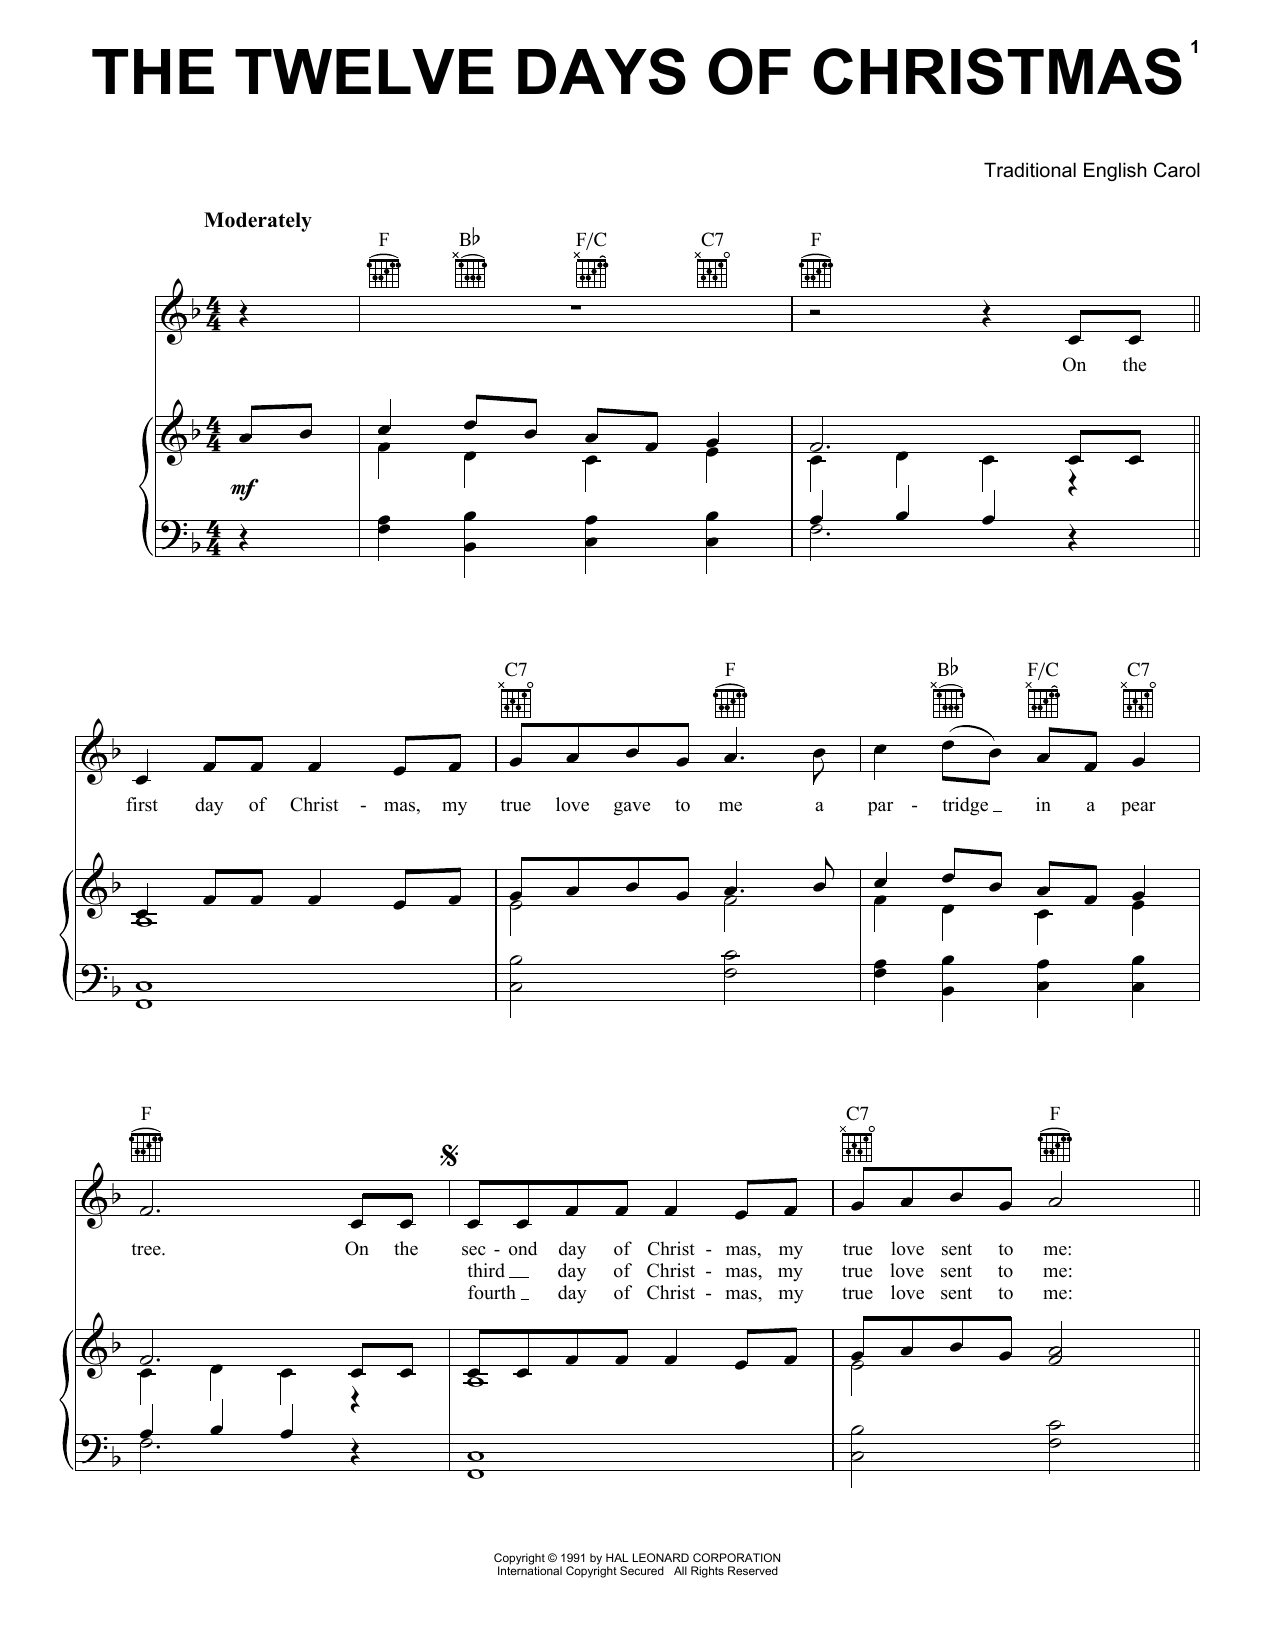 Traditional English Carol The Twelve Days Of Christmas sheet music notes and chords arranged for Ukulele